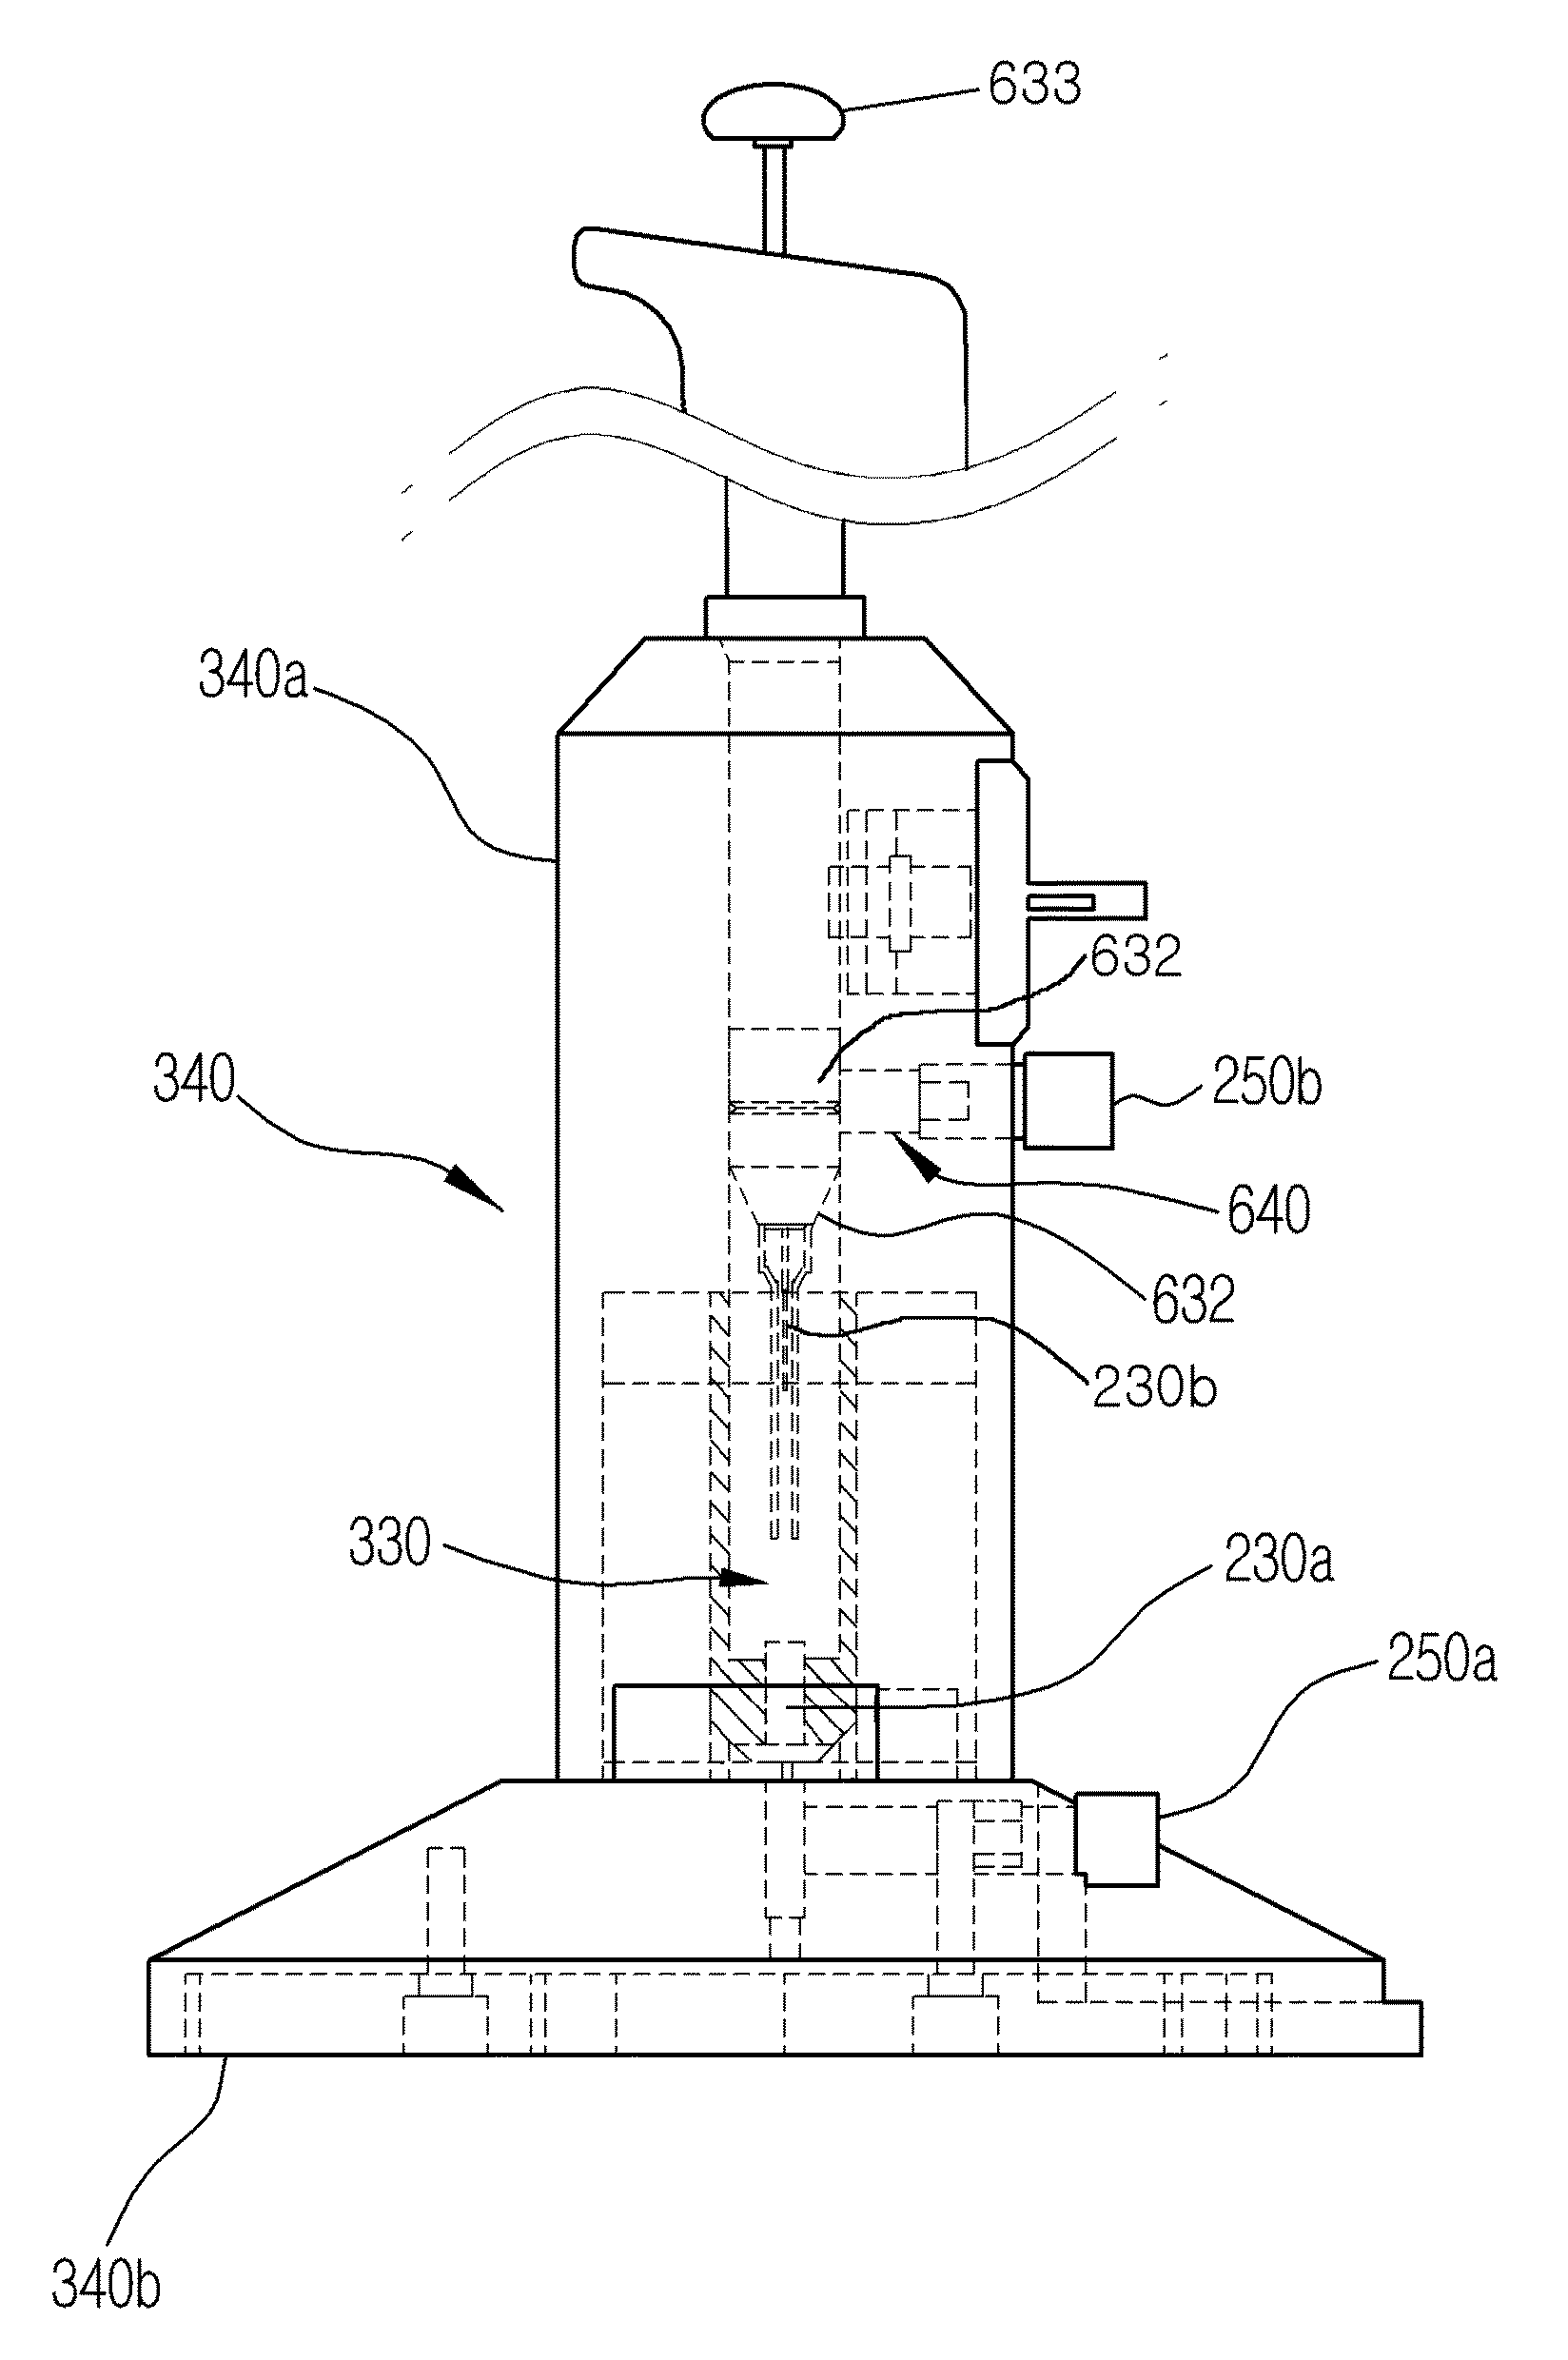 Electroporation apparatus having an elongated hollow member